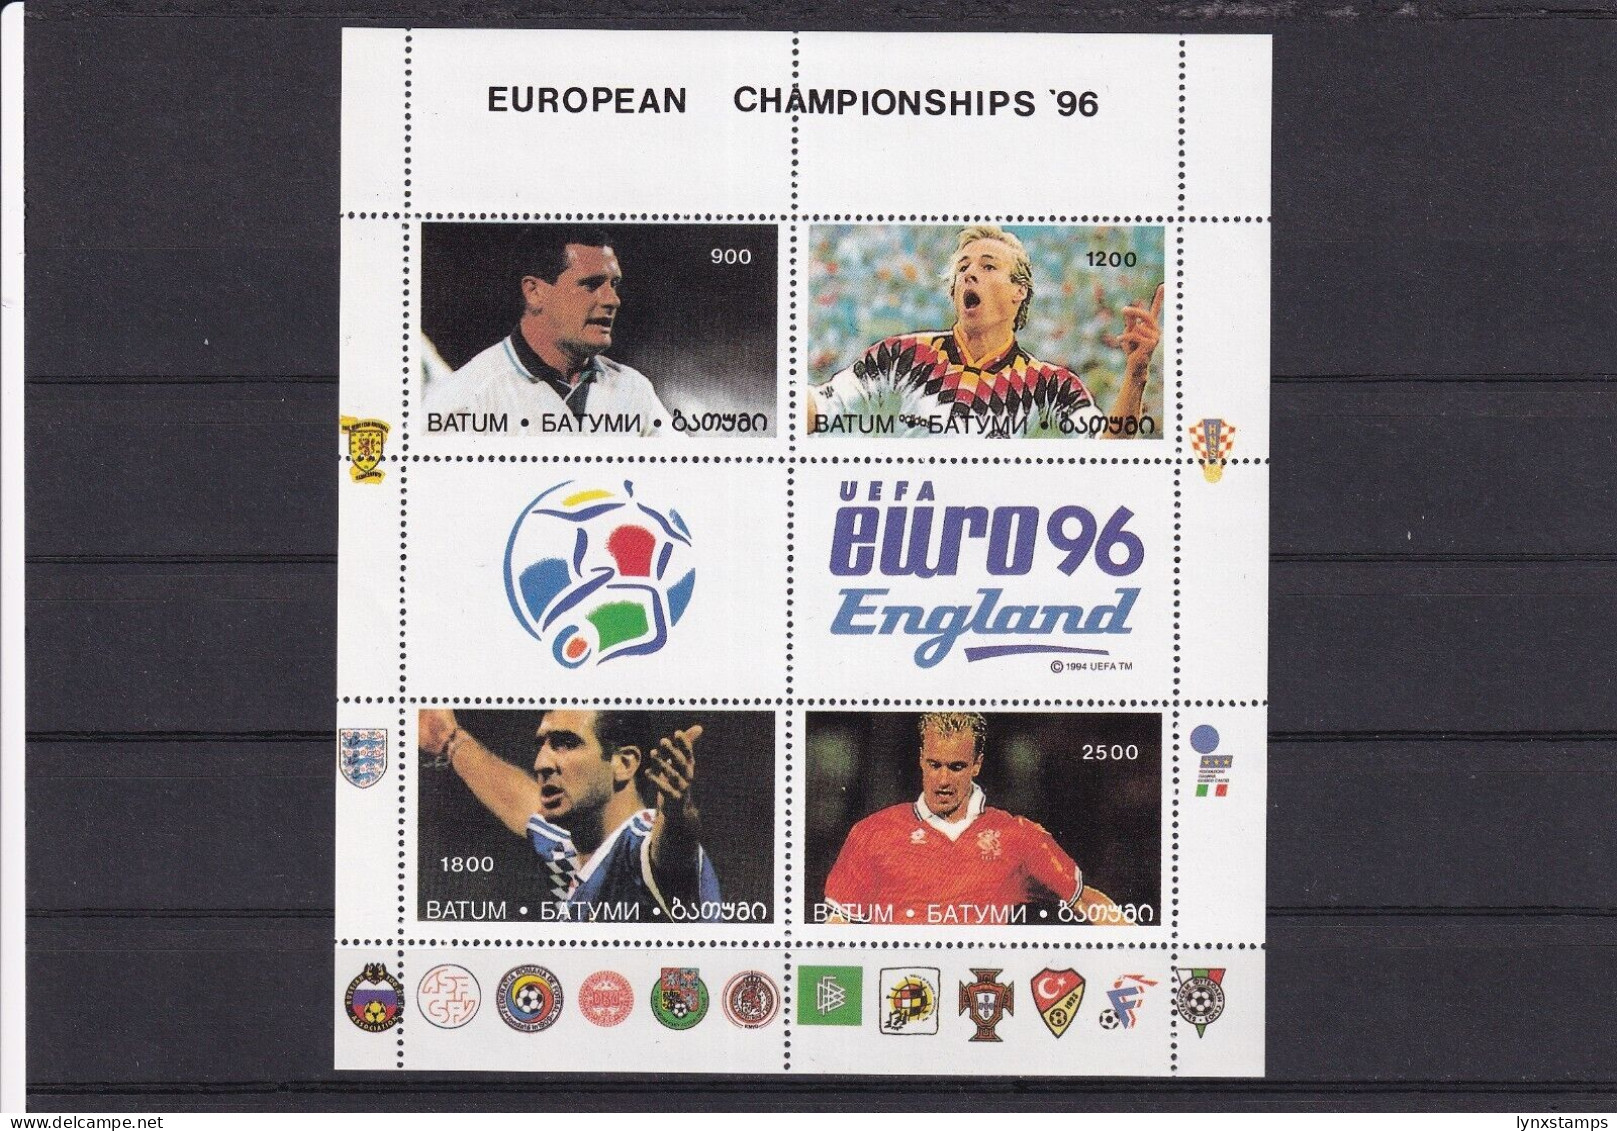 SA05 Batumi Georgia 1996 Football European Championship '96 Cinderella Block - Cinderellas